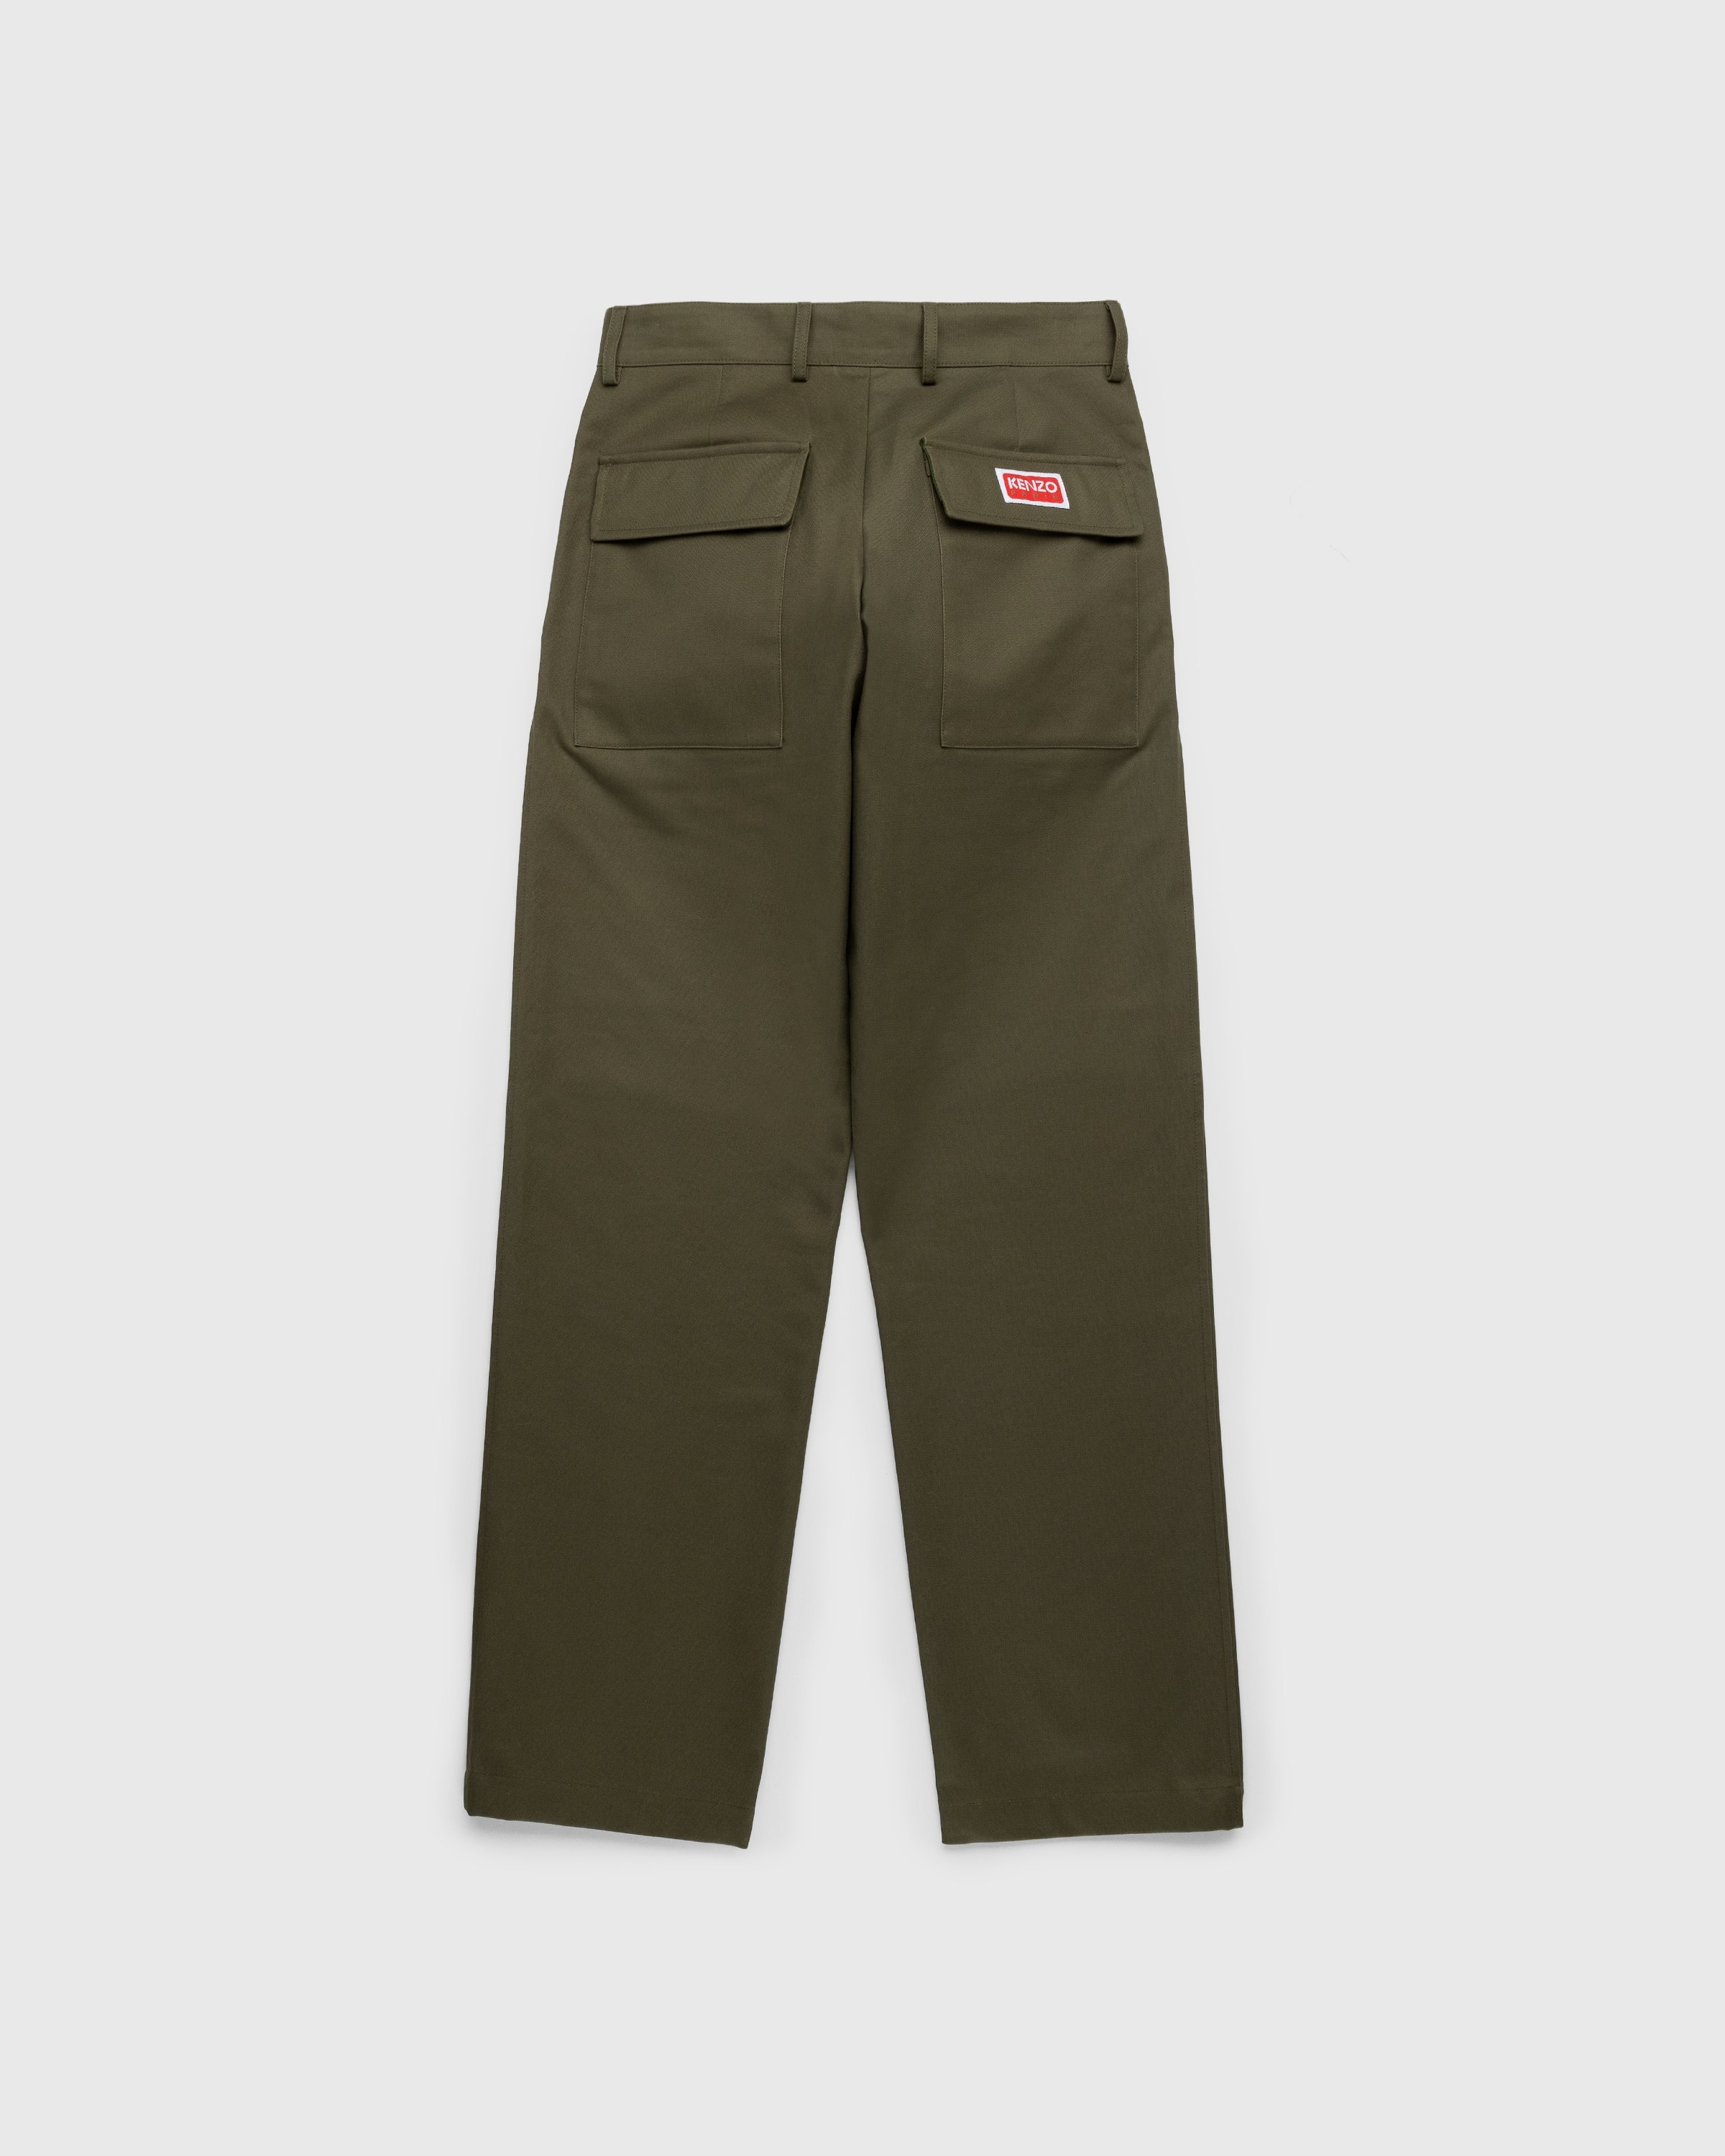 Kenzo – Tailored Pants Dark Khaki - Pants - Green - Image 2